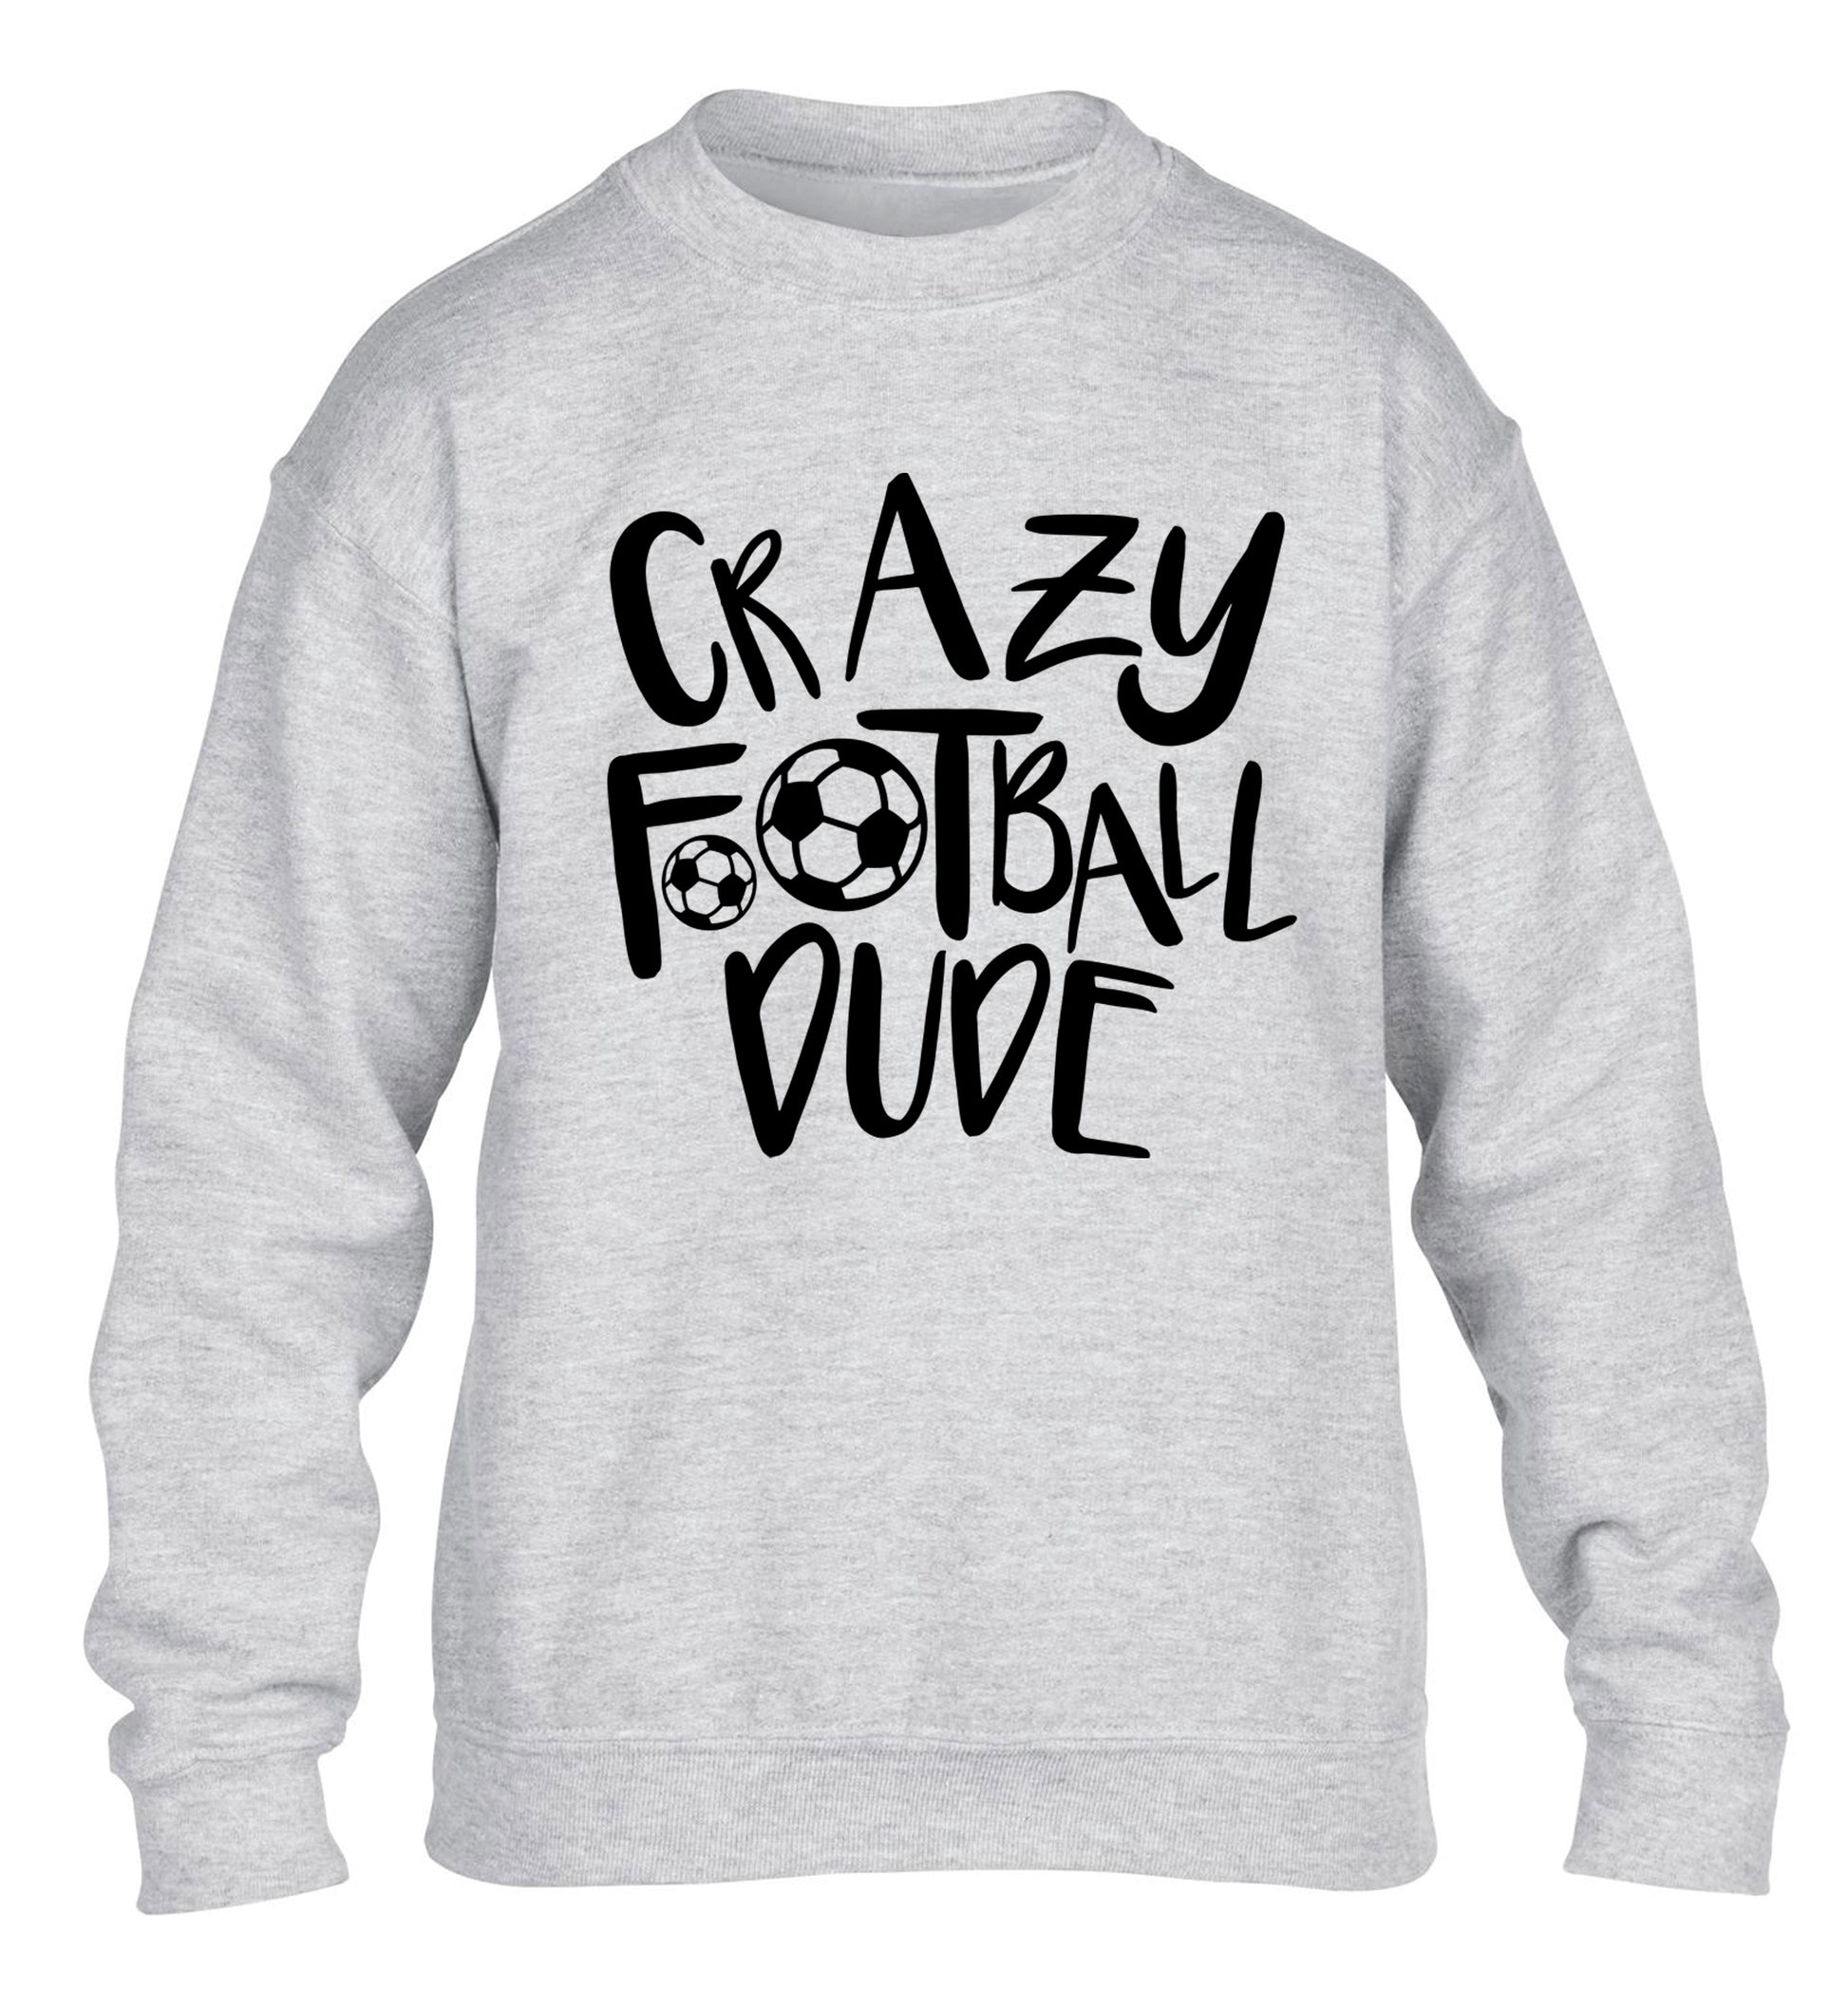 Crazy football dude children's grey sweater 12-14 Years